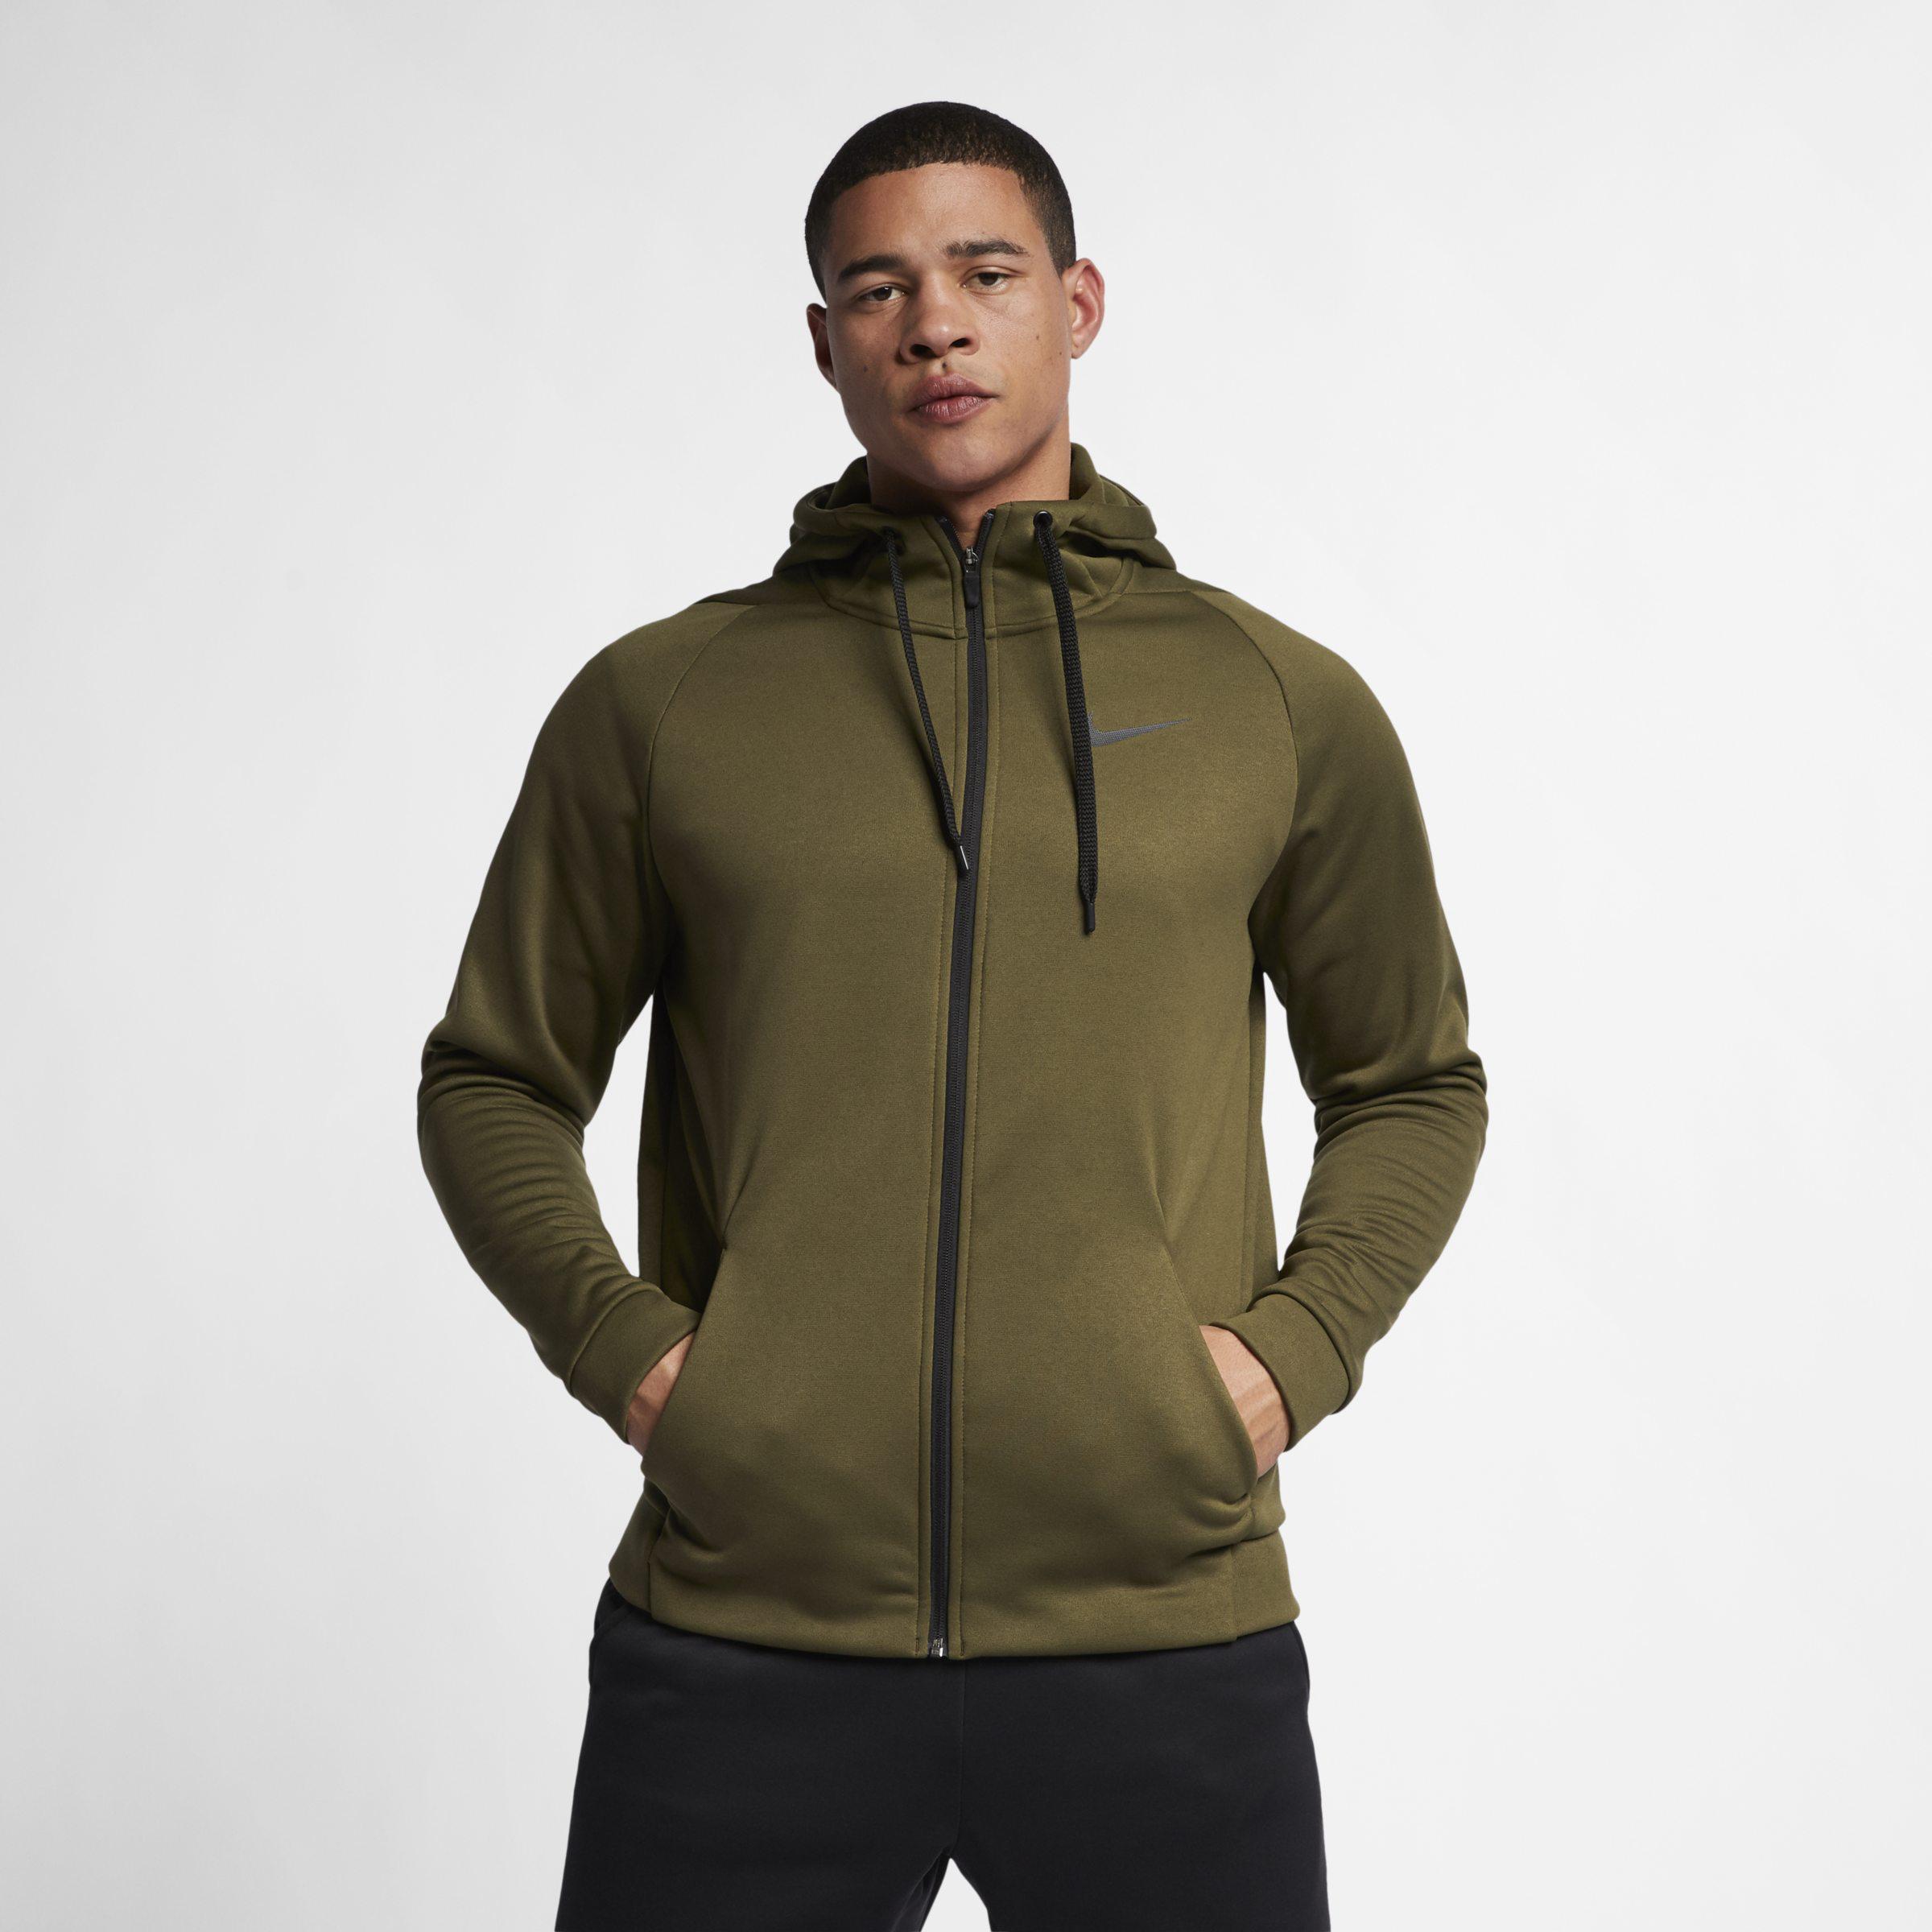 Nike Dri-fit Therma Full-zip Training Hoodie in Green for Men - Lyst